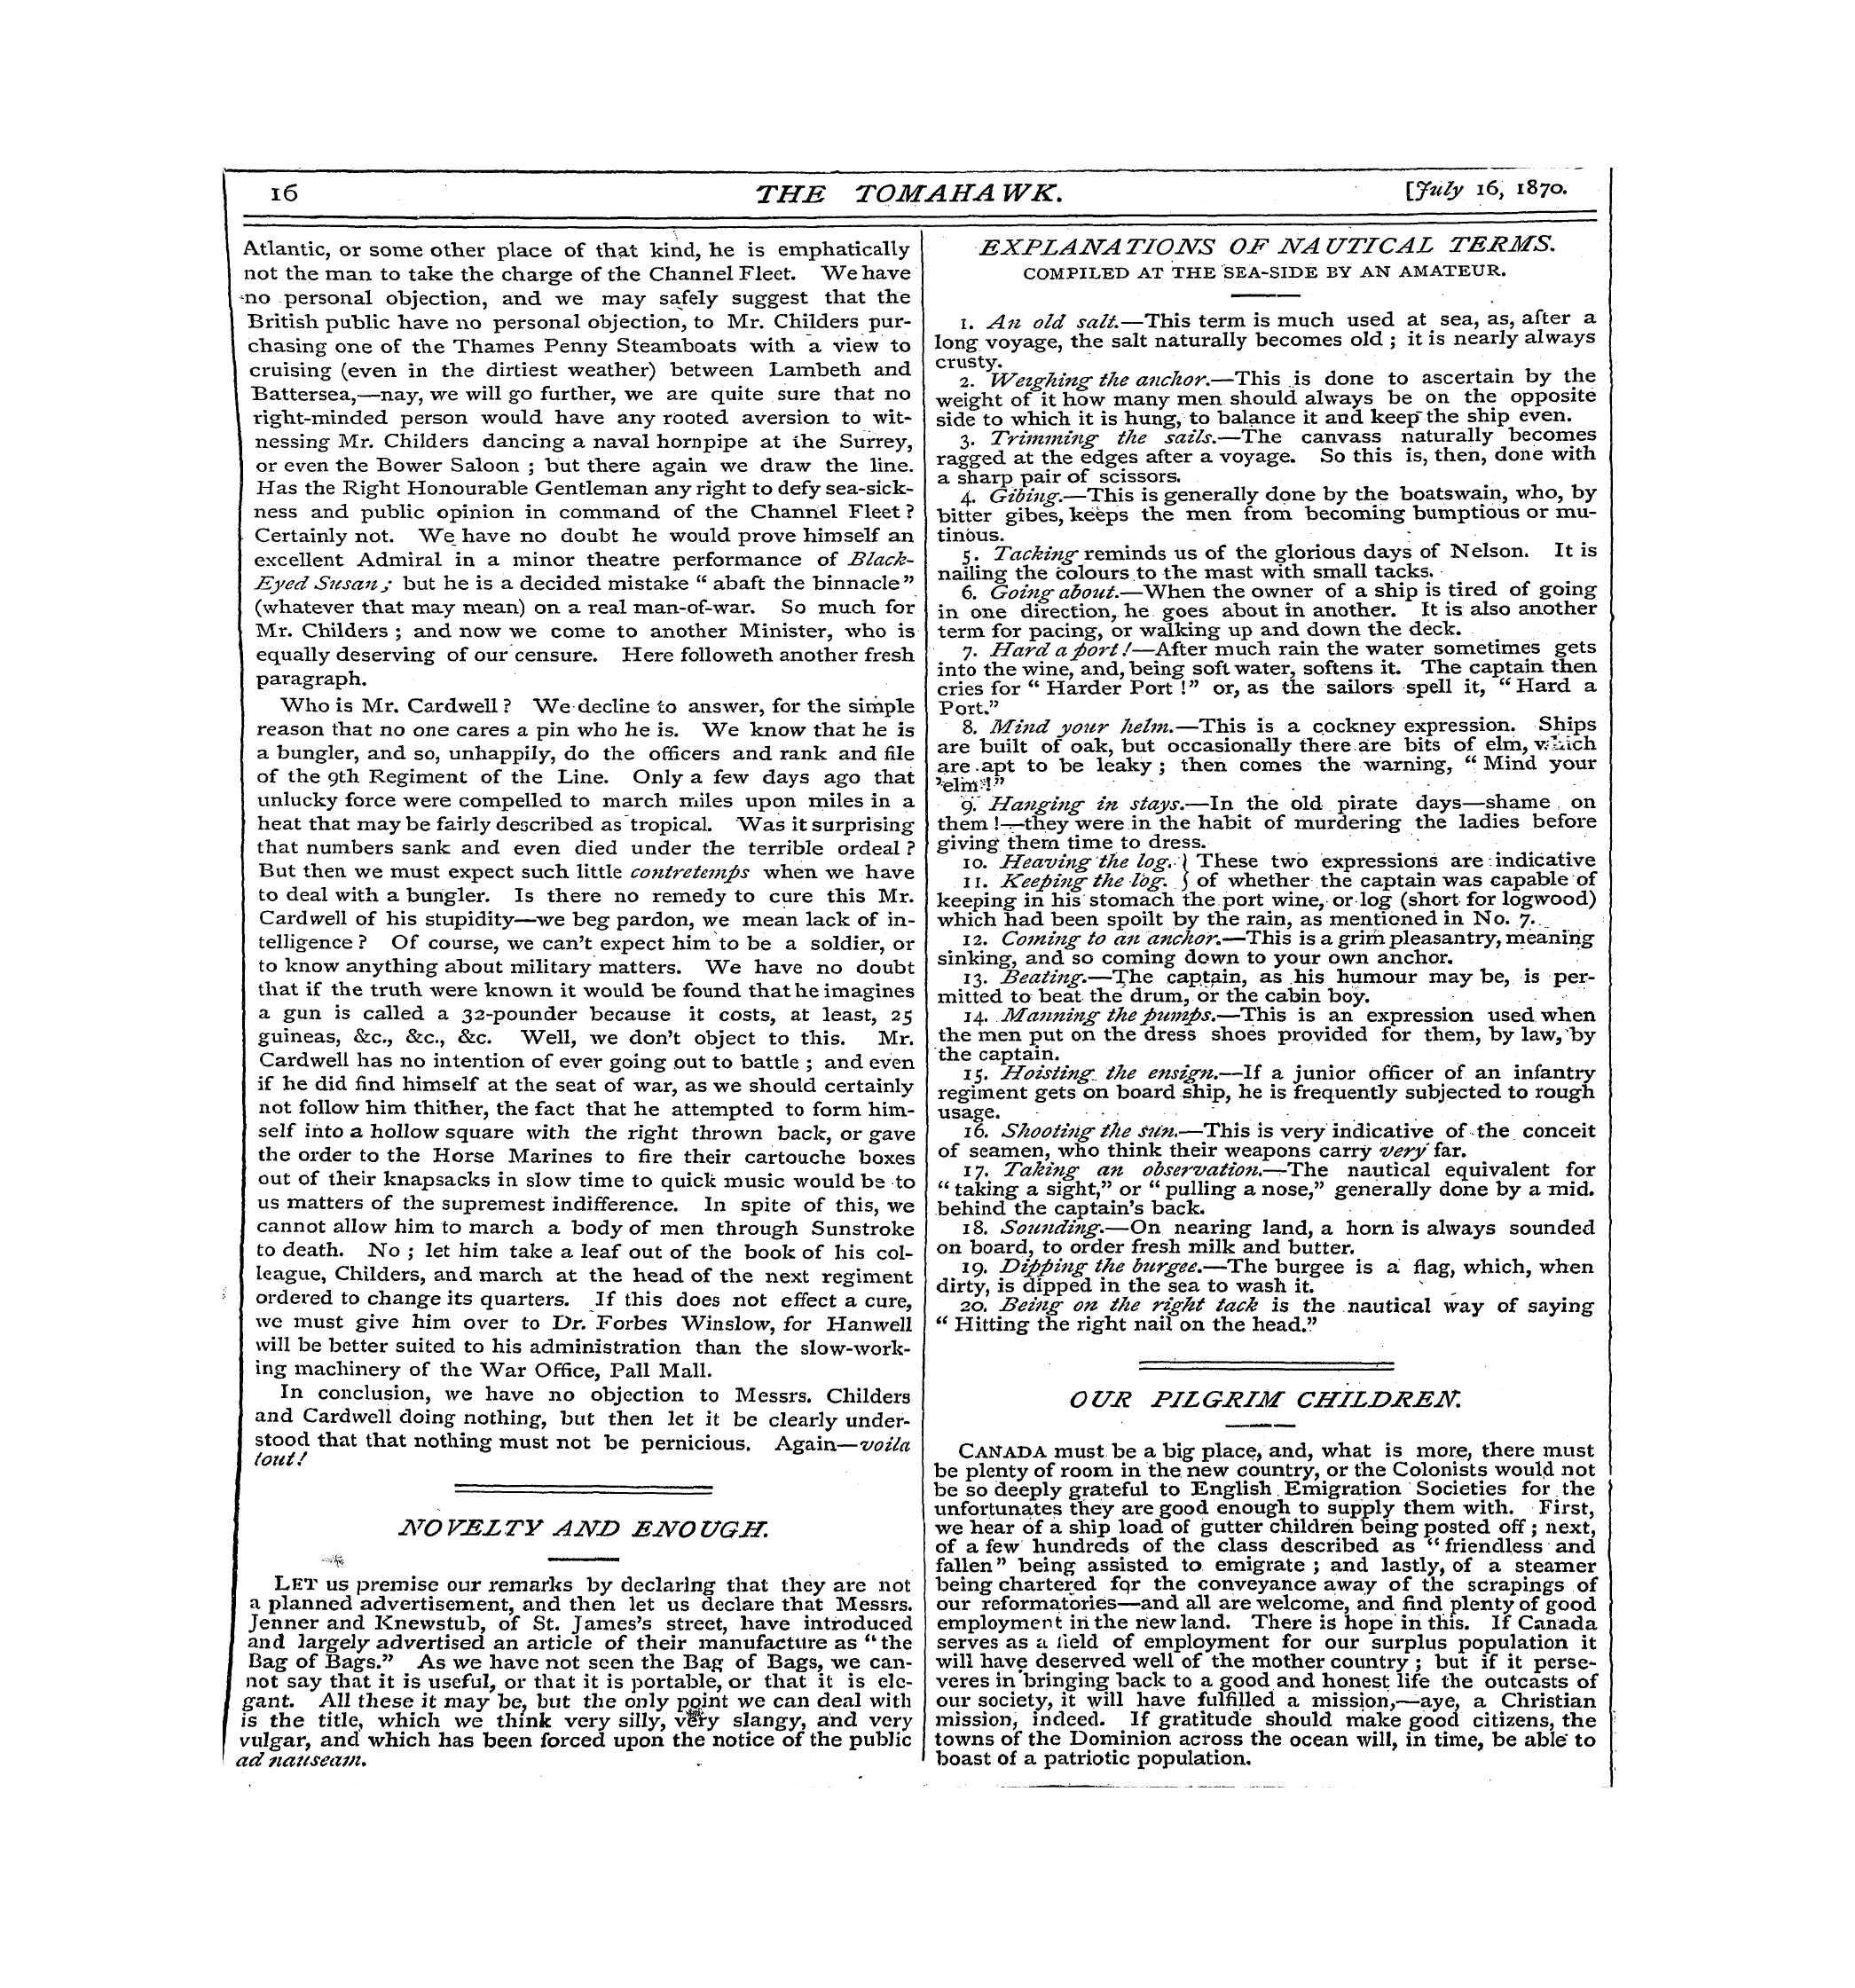 Tomahawk (1867-1870): jS F Y, 1st edition - Nokezty Amd Ejvough. -¦V& ¦ ¦ ¦ ¦ " - "